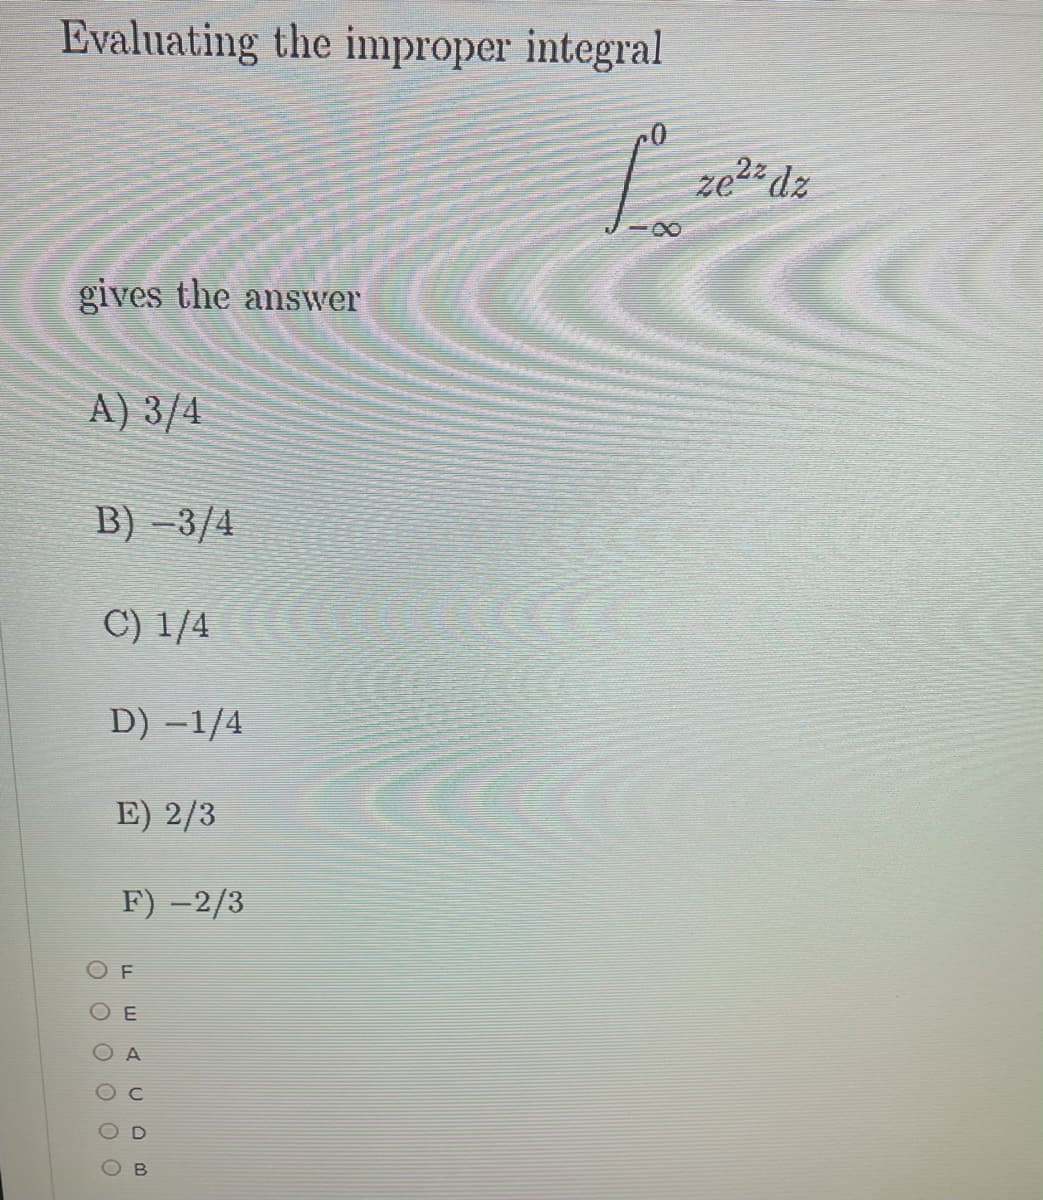 Evaluating the improper integral
ze2 dz
gives the answer
A) 3/4
B) –3/4
C) 1/4
D) -1/4
E) 2/3
F) -2/3
O F
O E
O A
